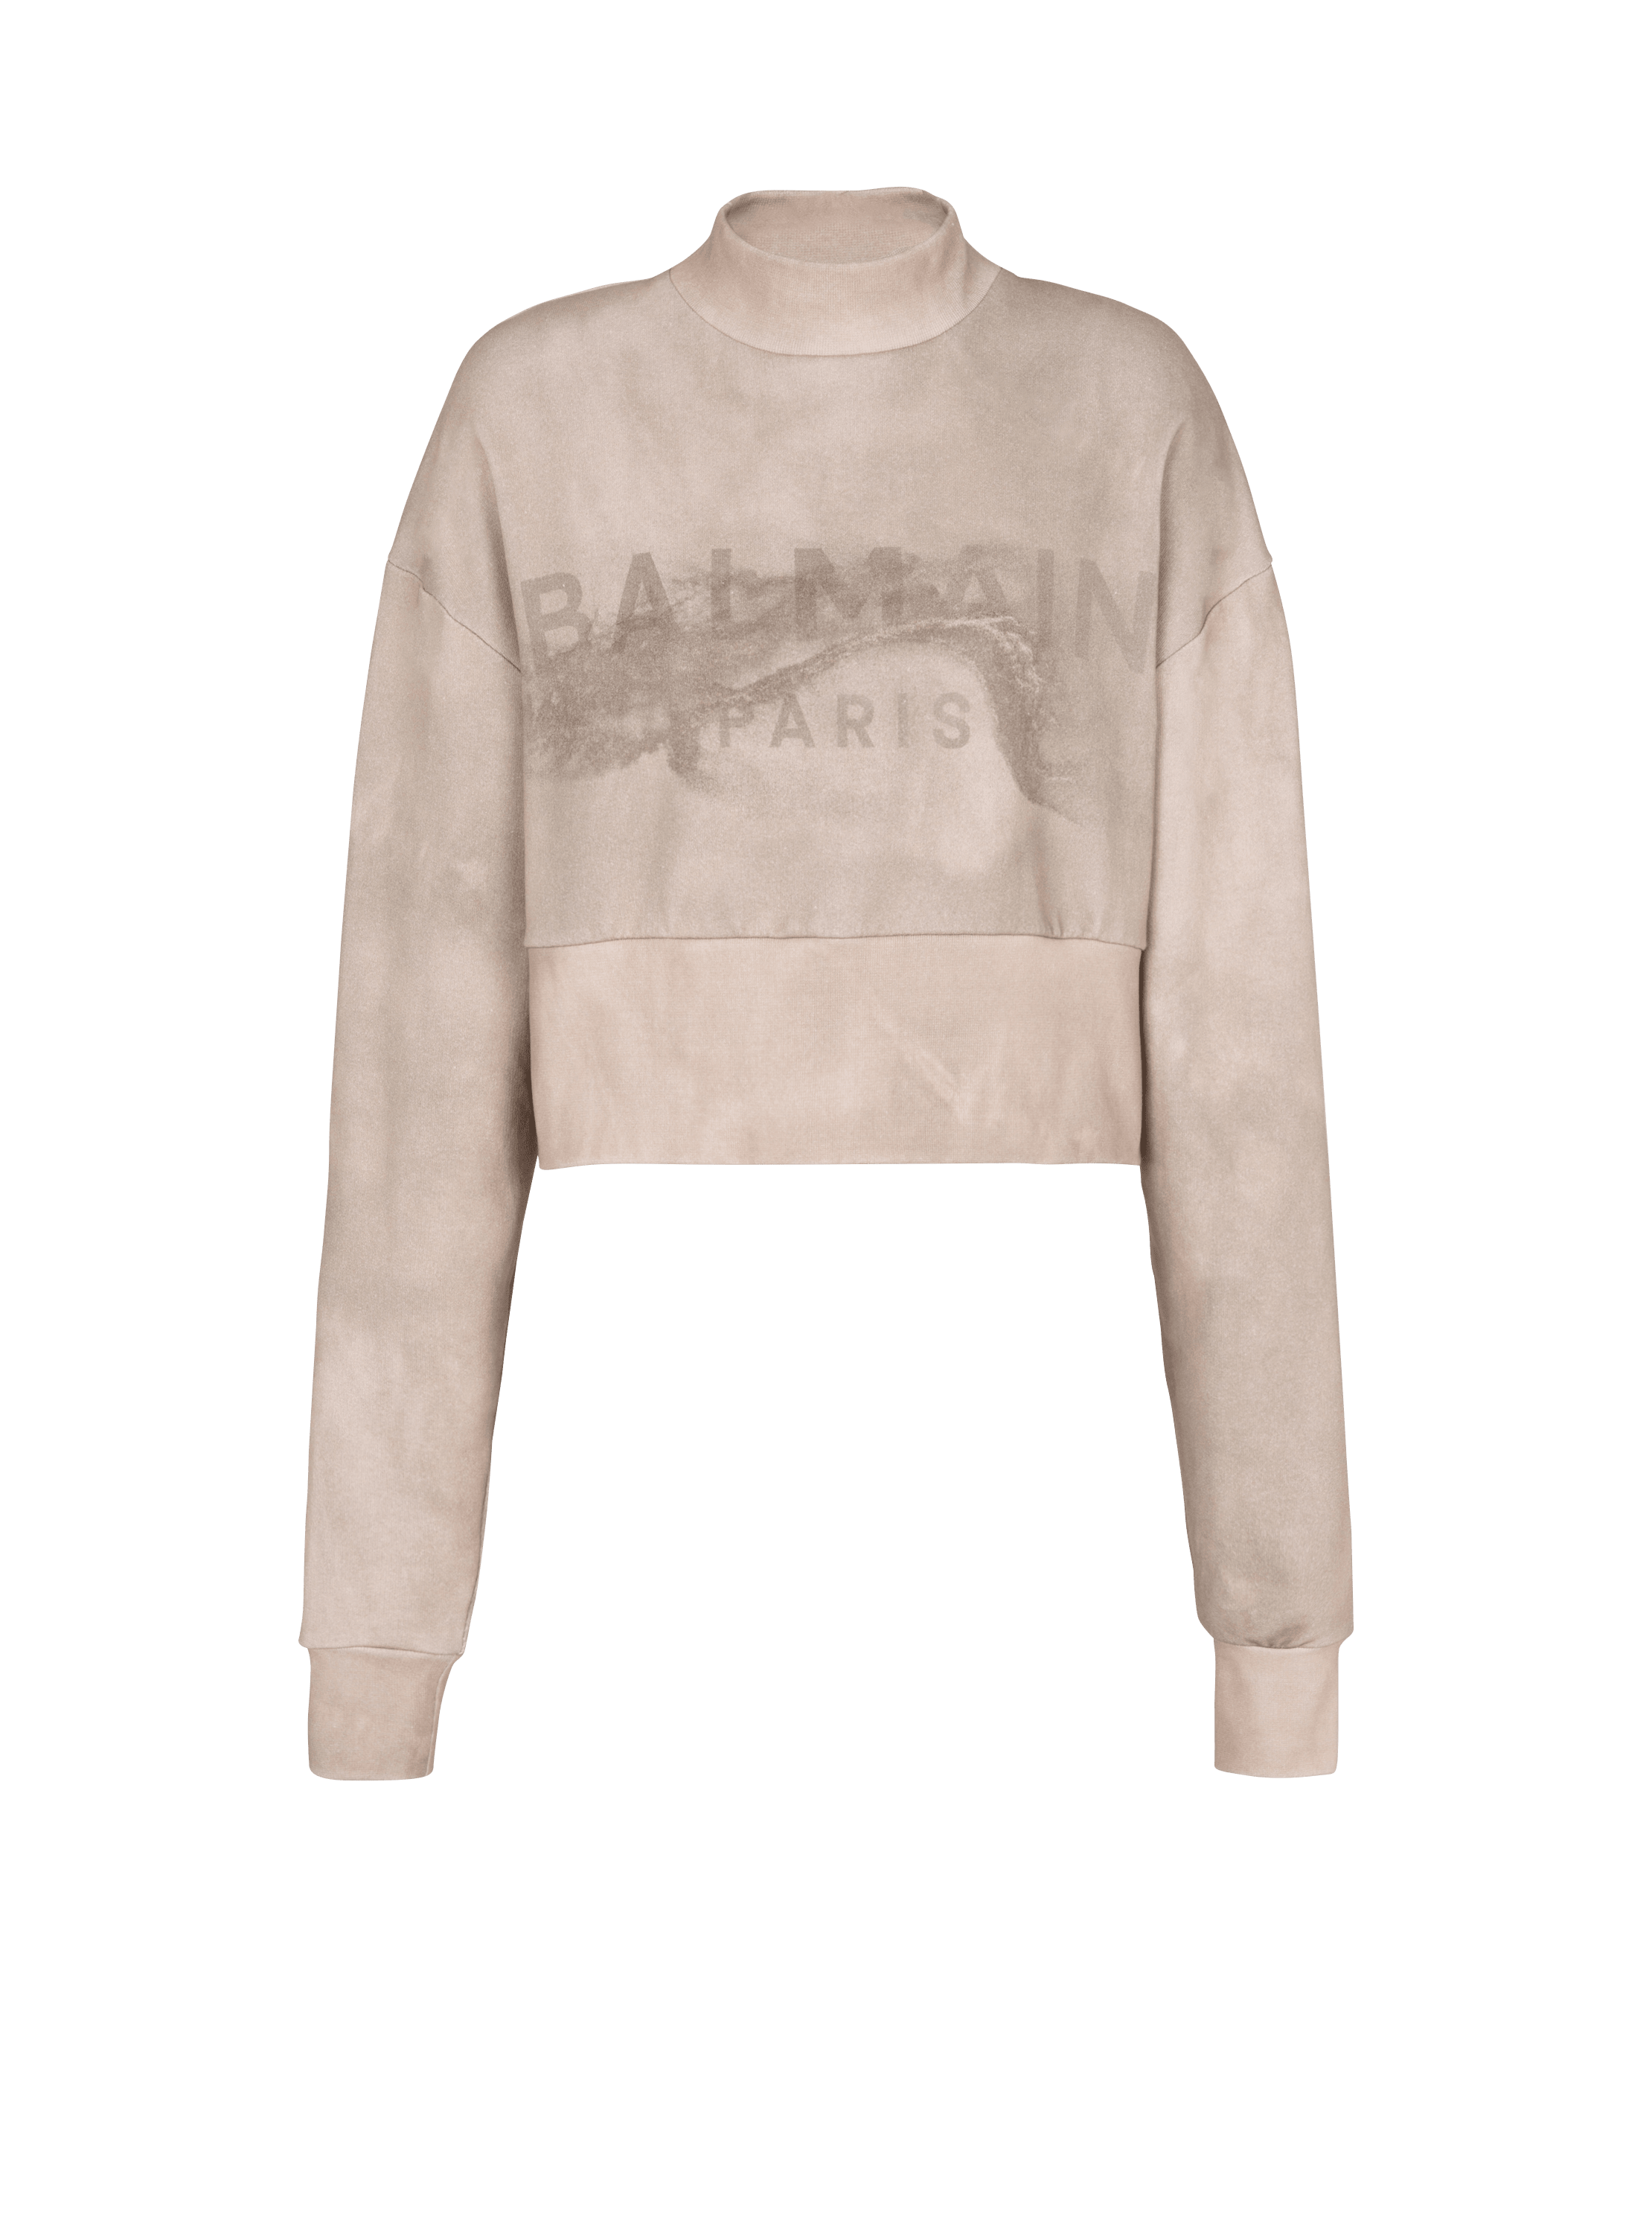 Balmain巴尔曼标志印花短款环保设计棉质运动衫, beige, hi-res